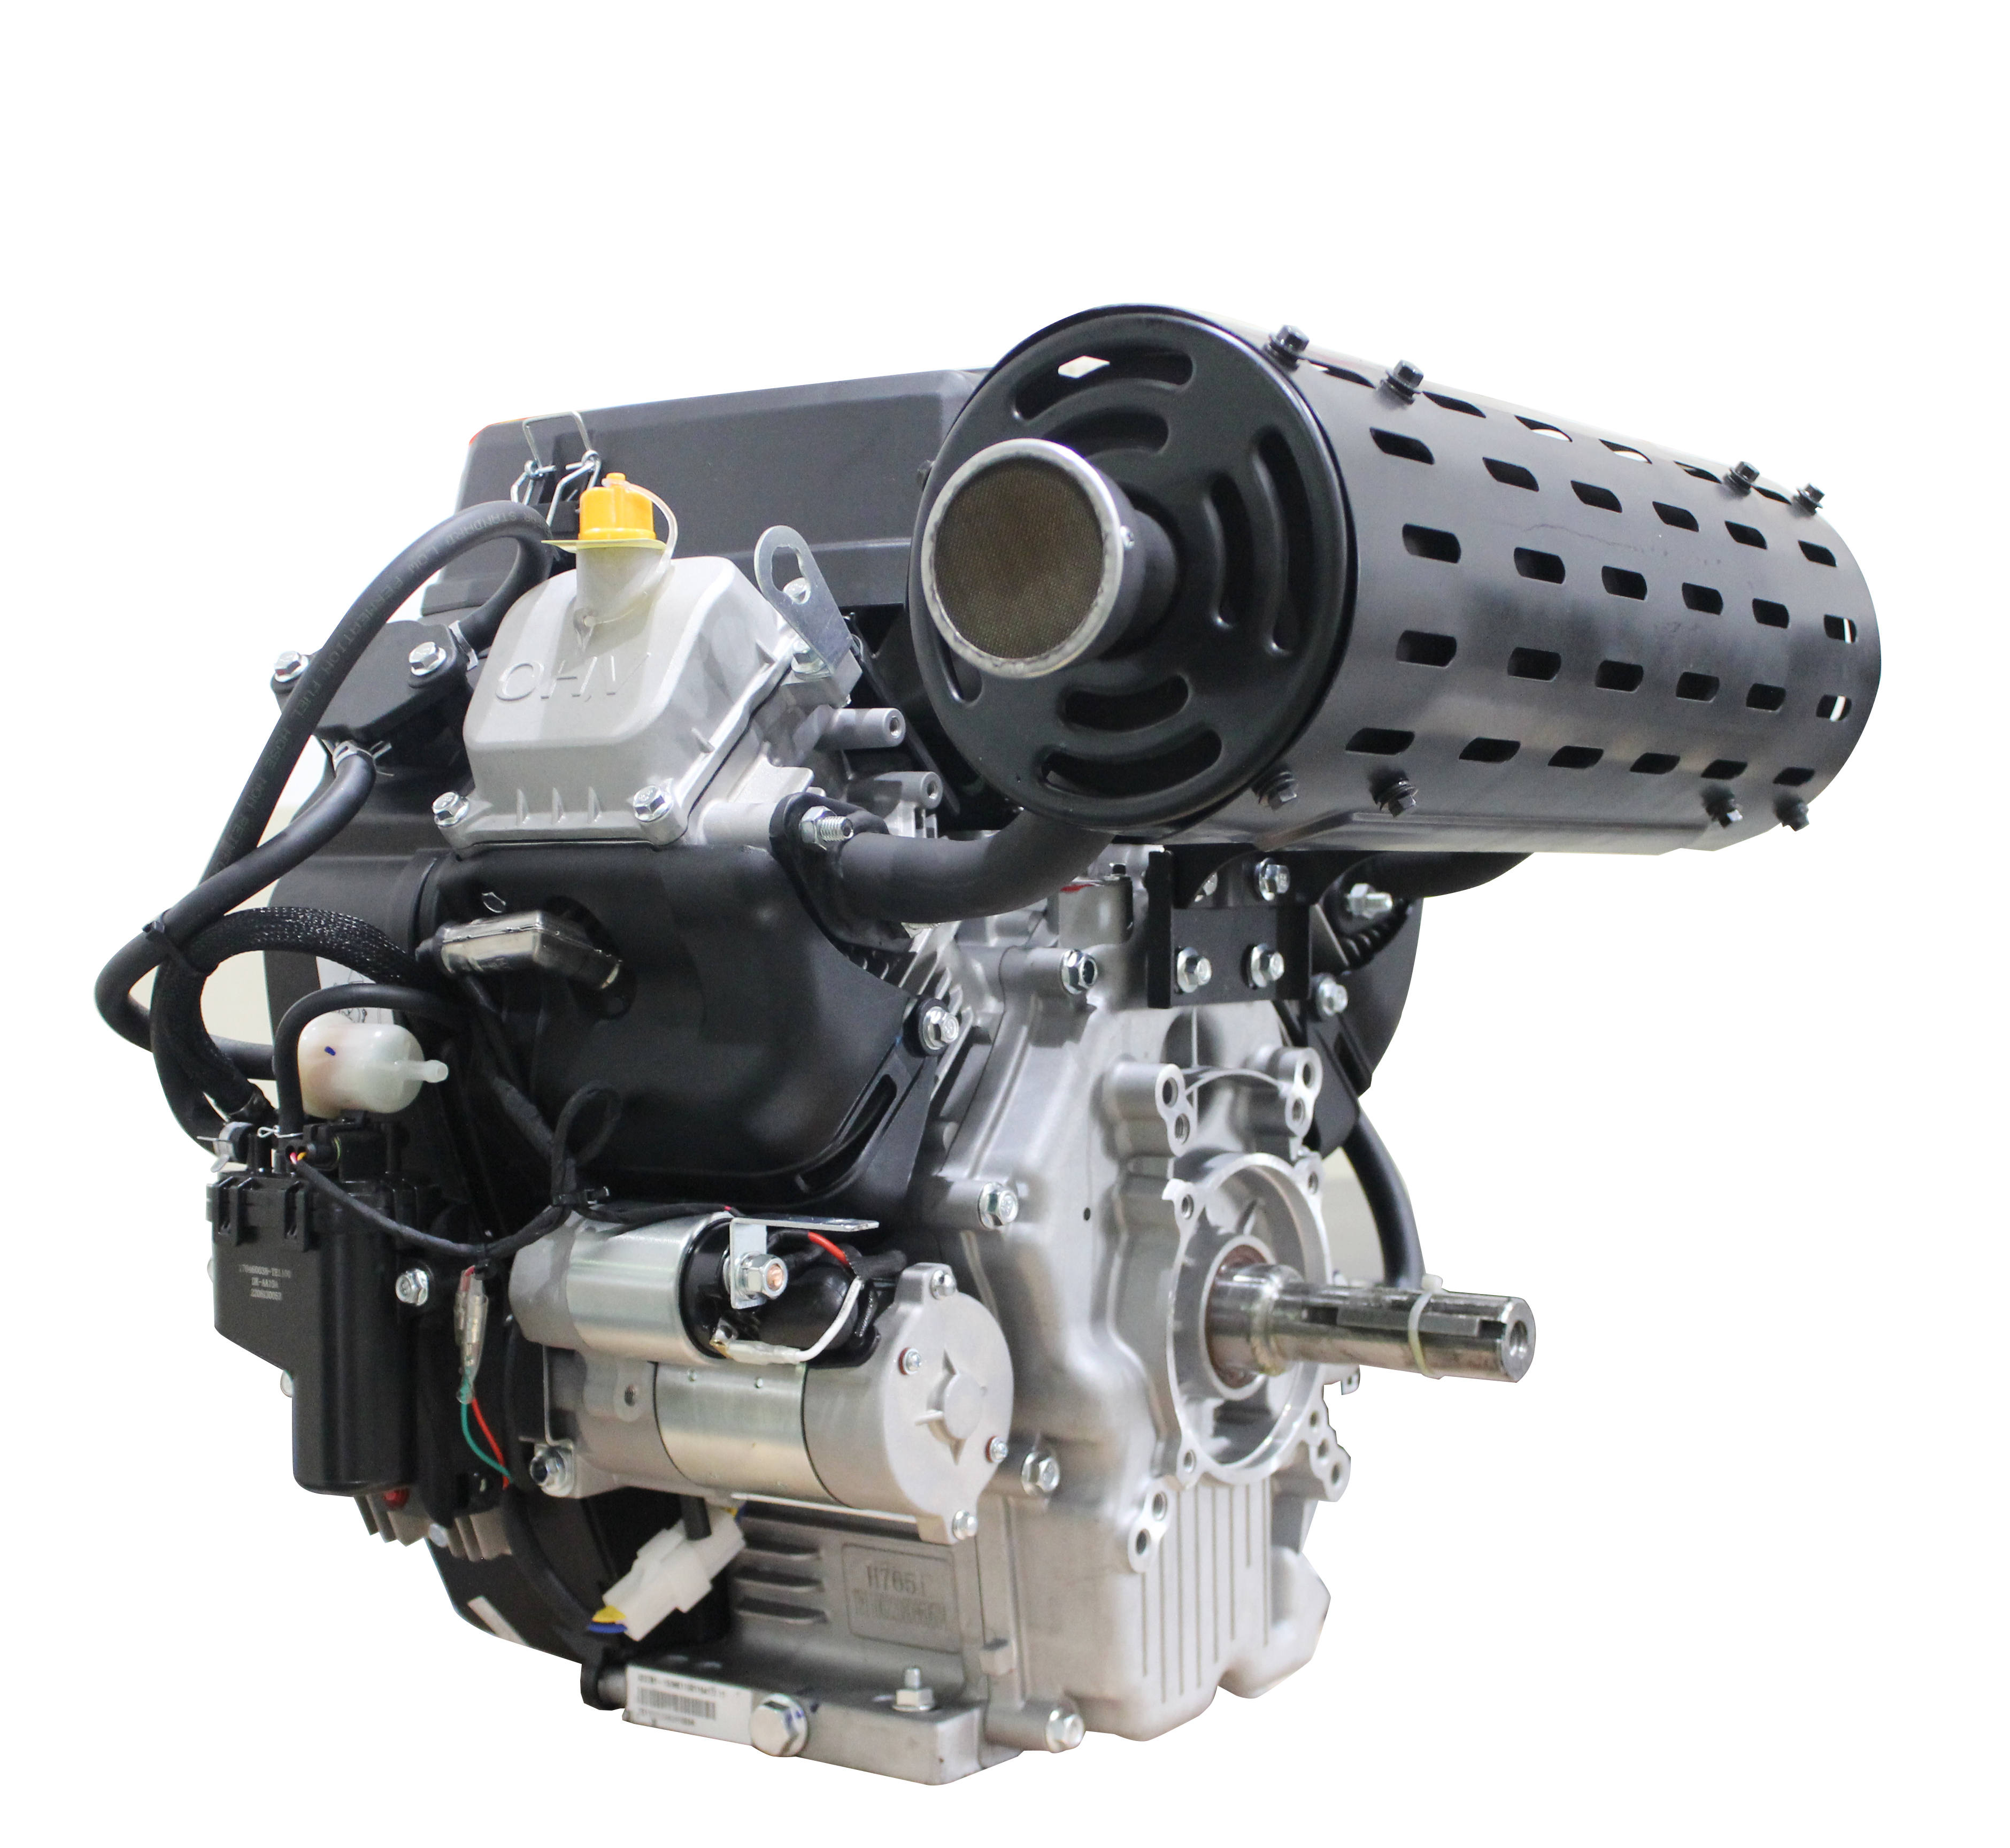 27 PS 764 cc Industriebenzin V Twin Engine EPA/EURO-V